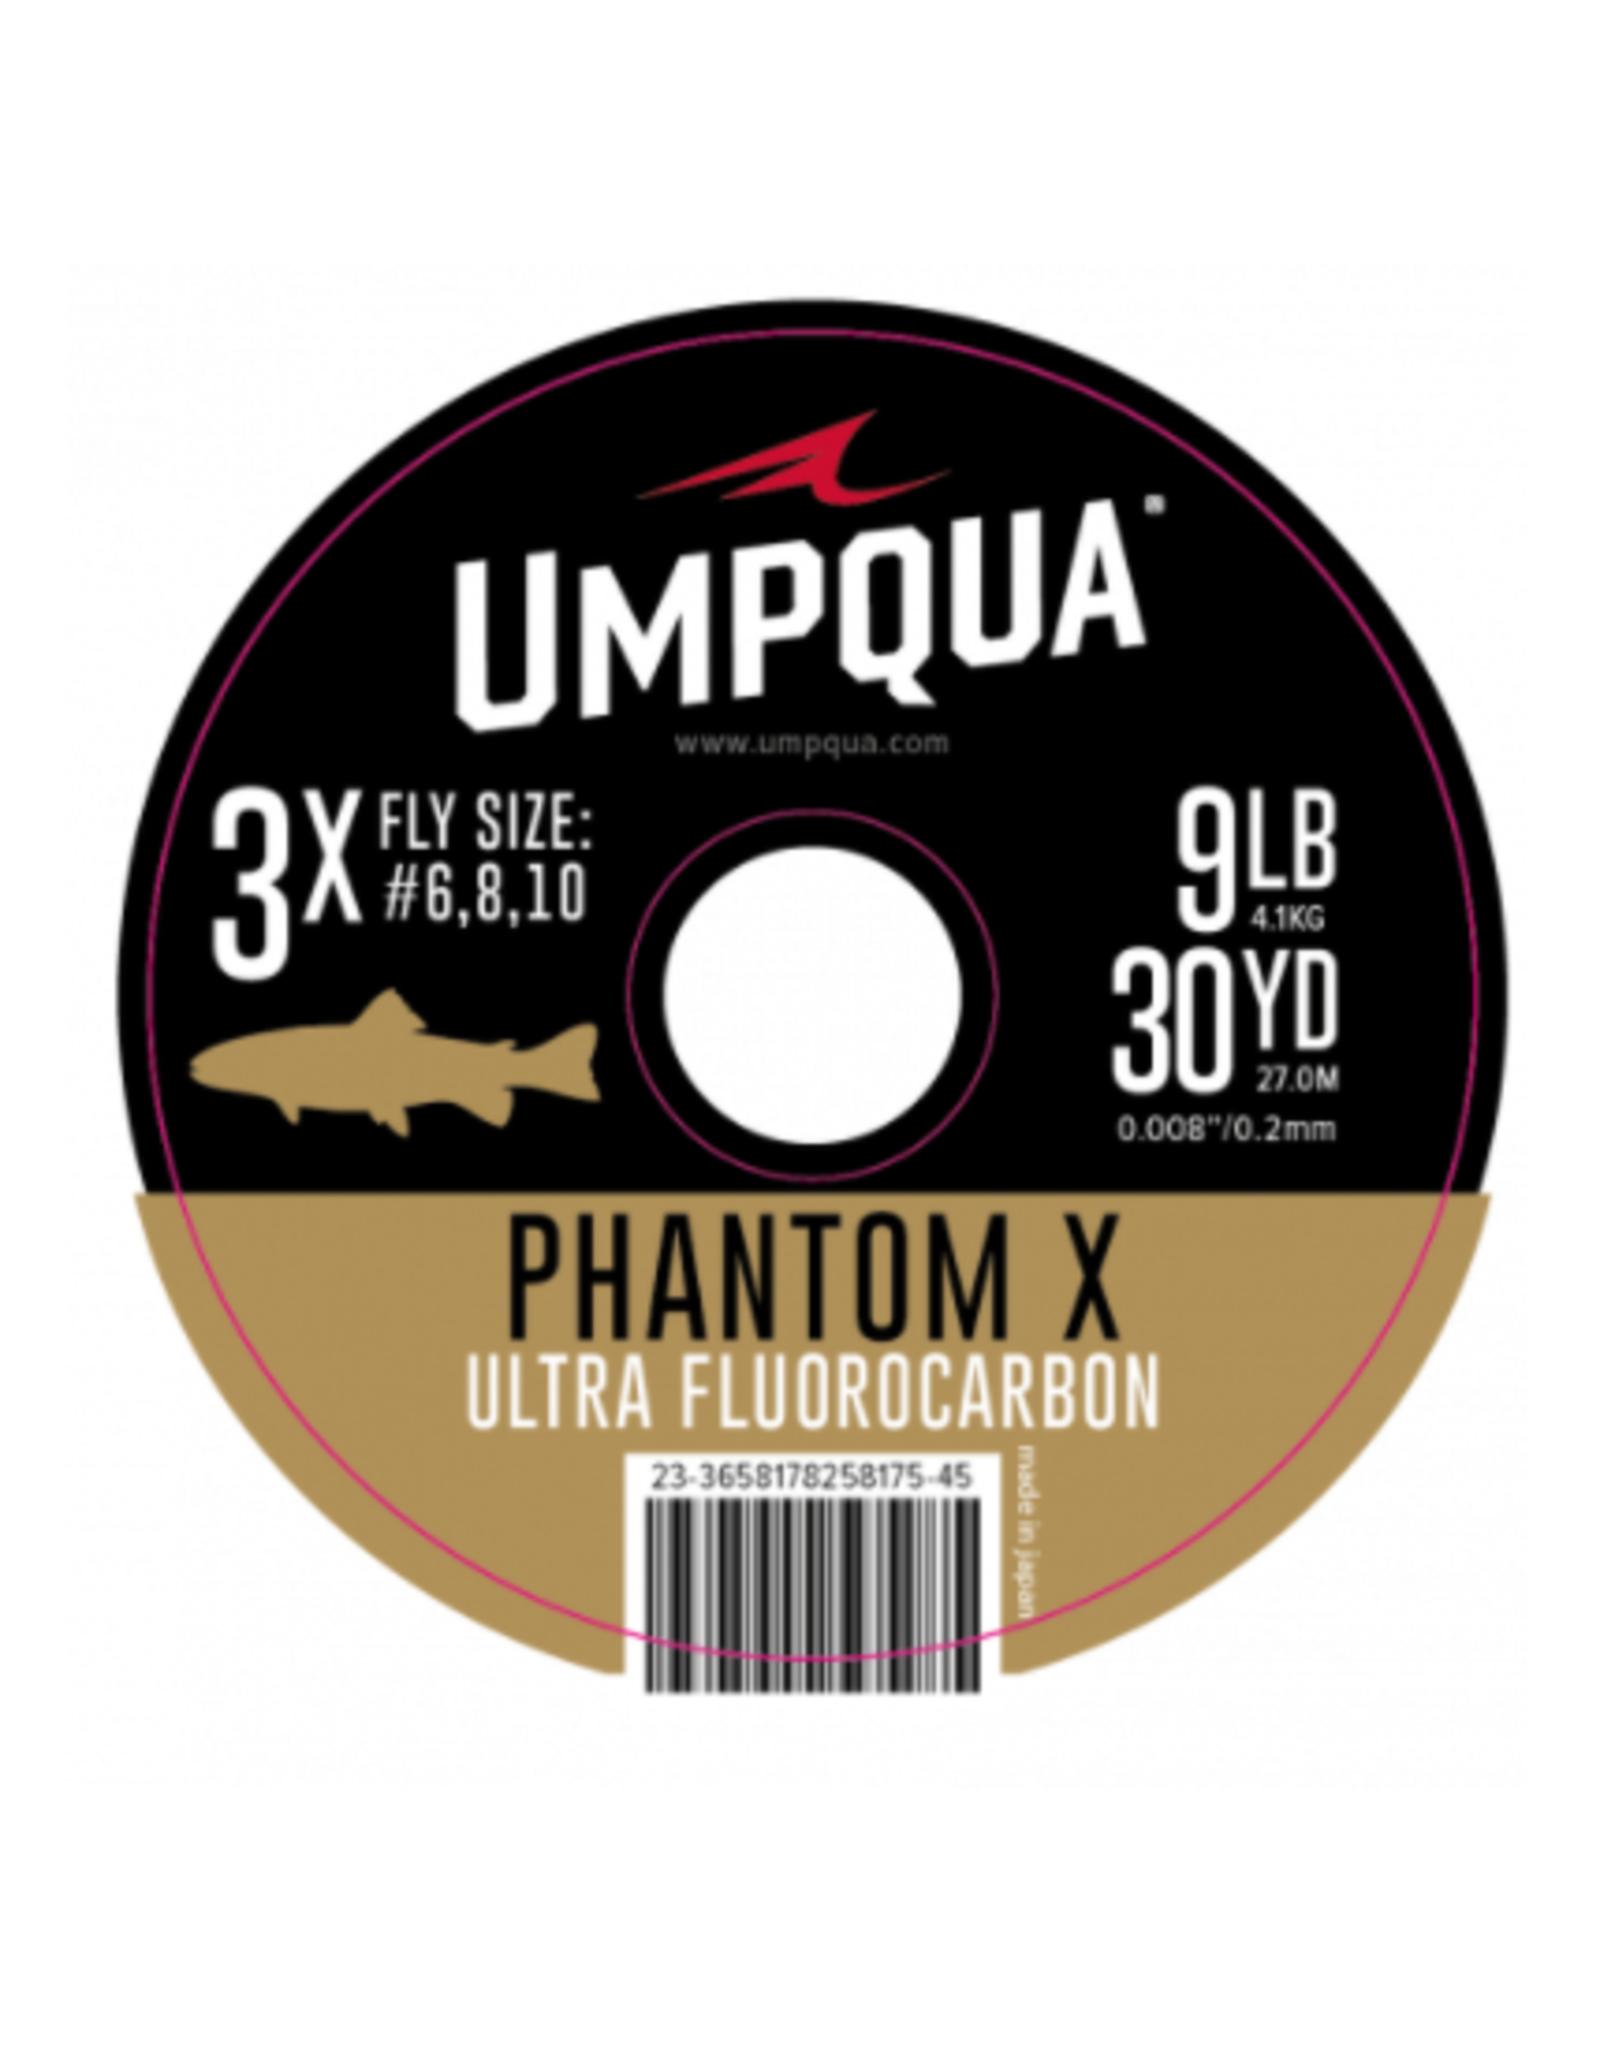 Umpqua Phantom X Ultra Fluorocarbon Tippet - Royal Gorge Anglers